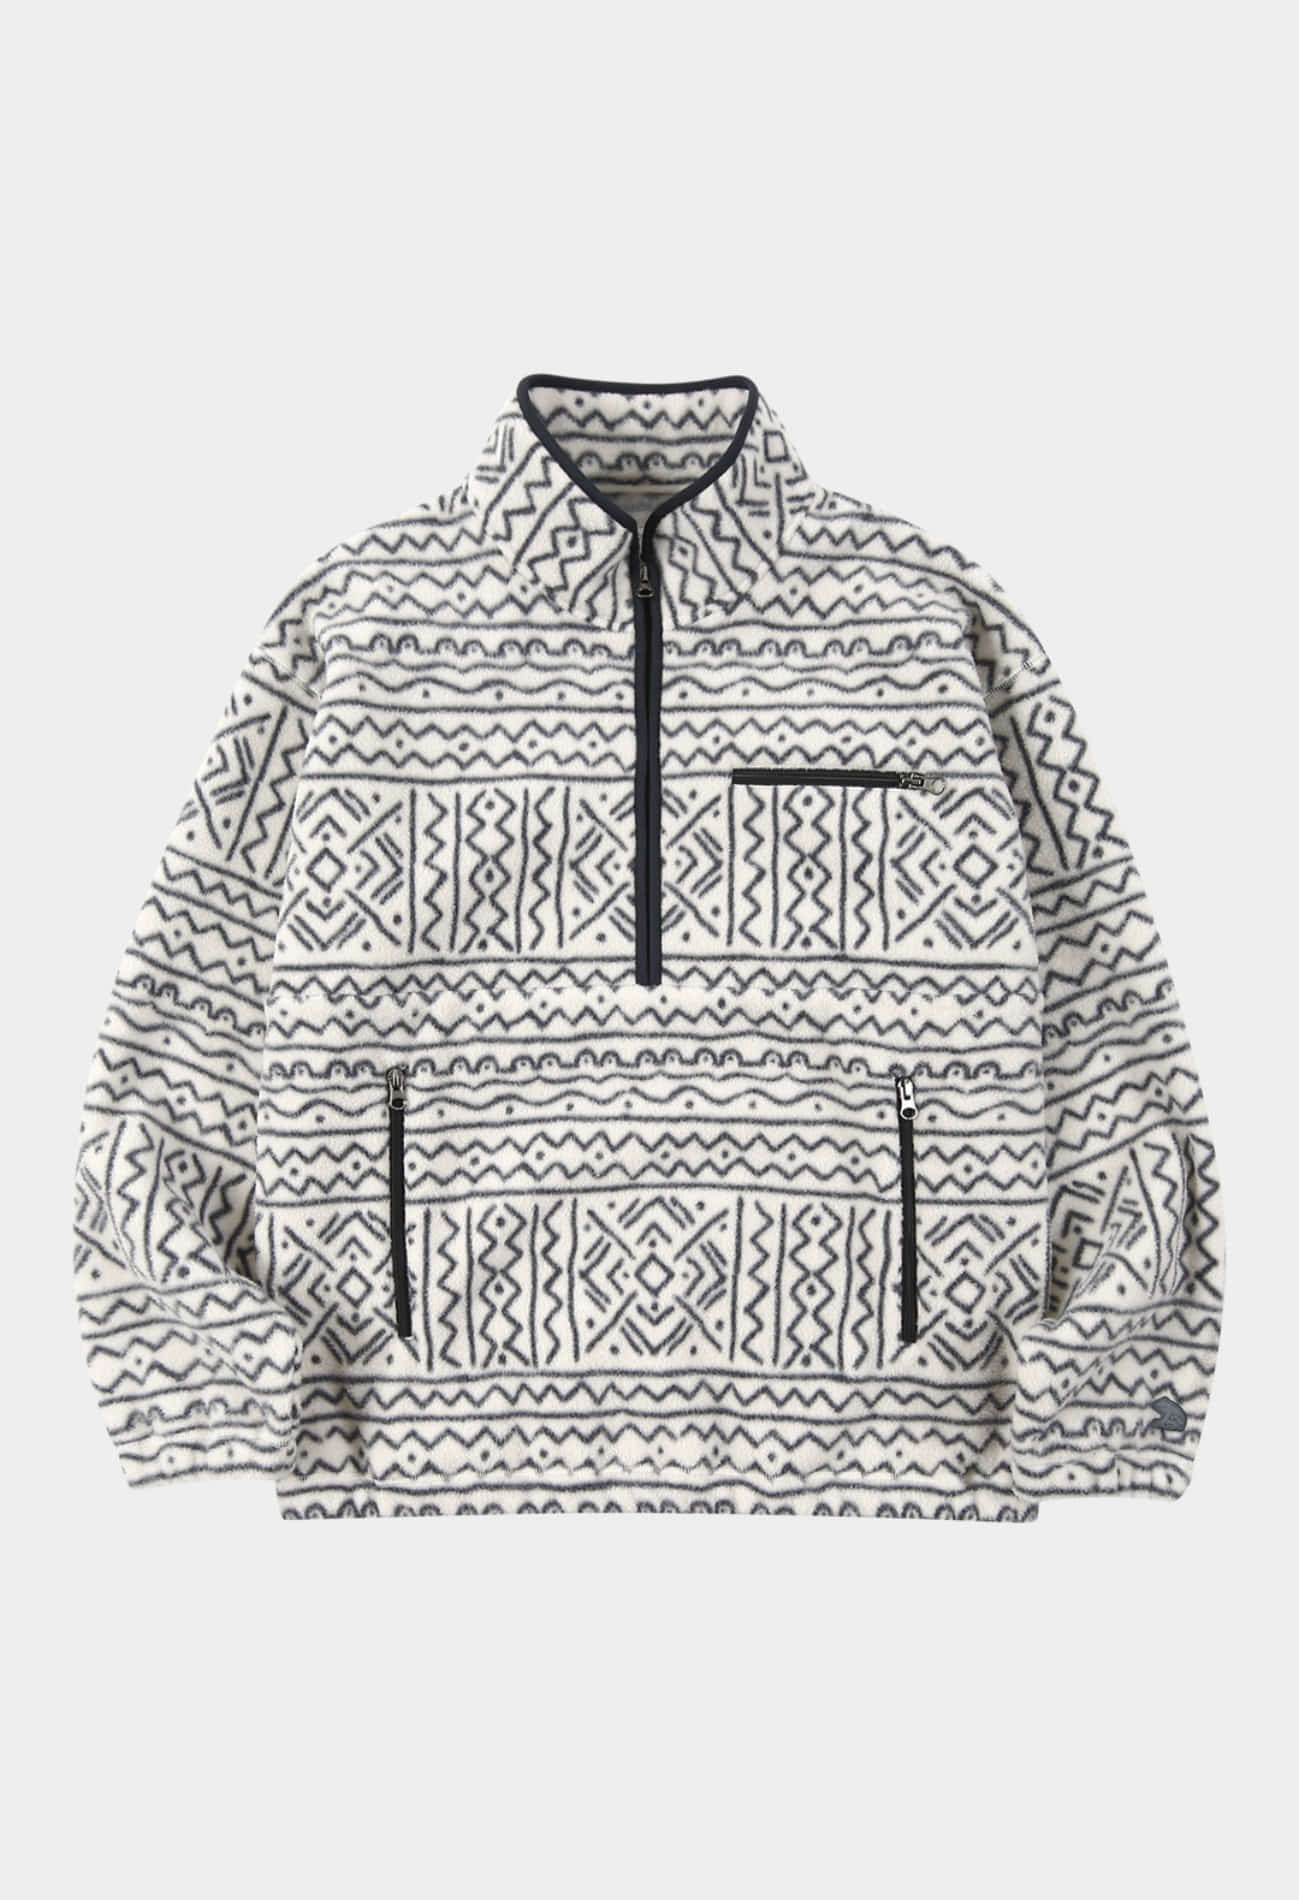 keek Nordic Half-Zip Fleece (Oversize Fit) - Ivory 스트릿패션 유니섹스브랜드 커플시밀러룩 남자쇼핑몰 여성의류쇼핑몰 후드티 힙색